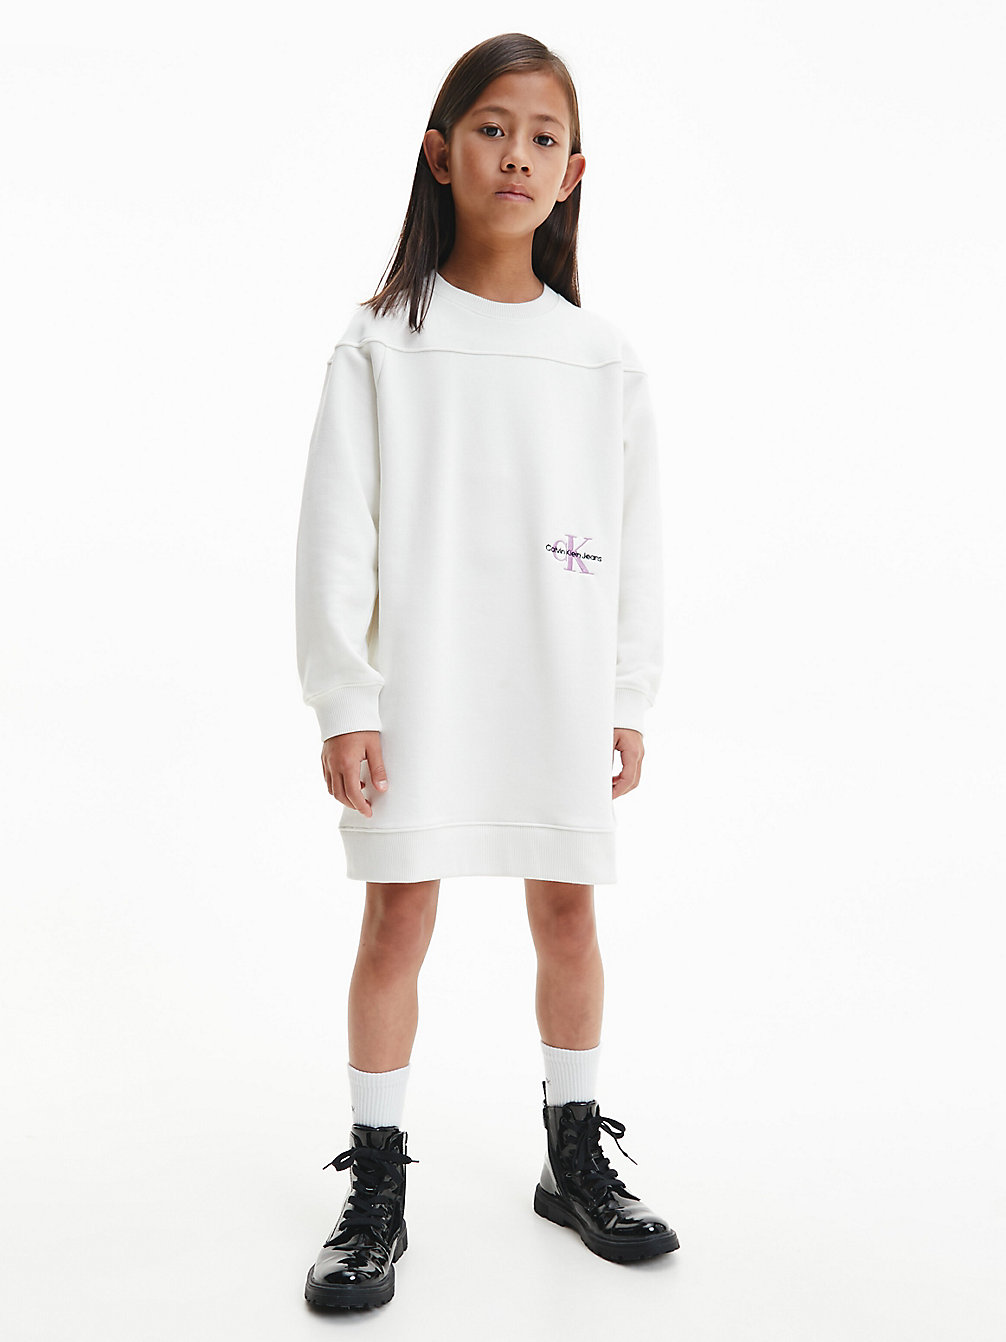 IVORY Relaxed Sweatshirt Dress undefined girls Calvin Klein